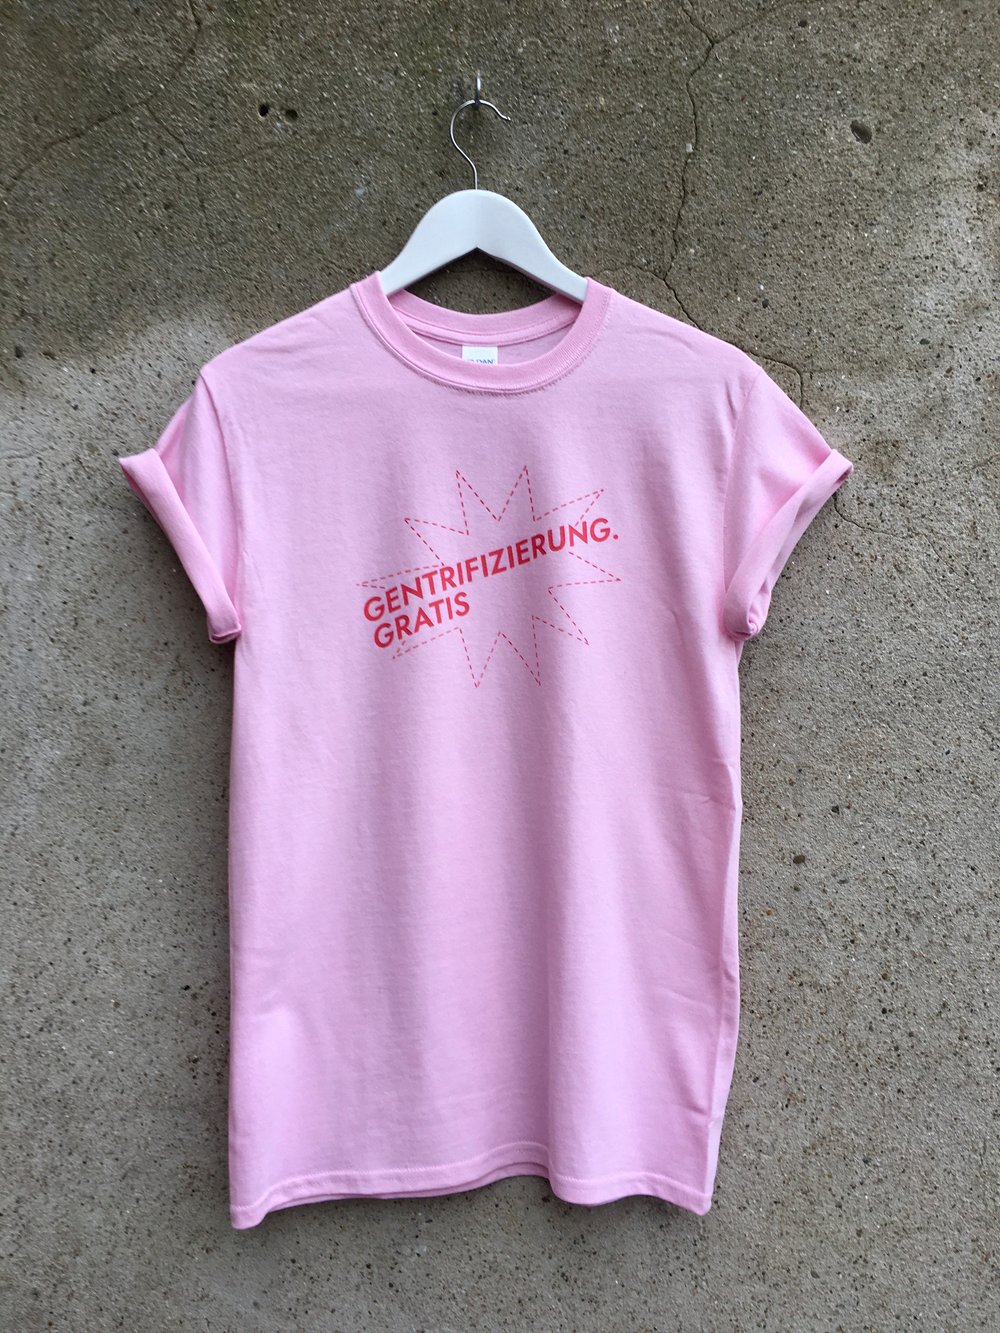 Image of Rosa Gentrifizierung Gratis Shirt 